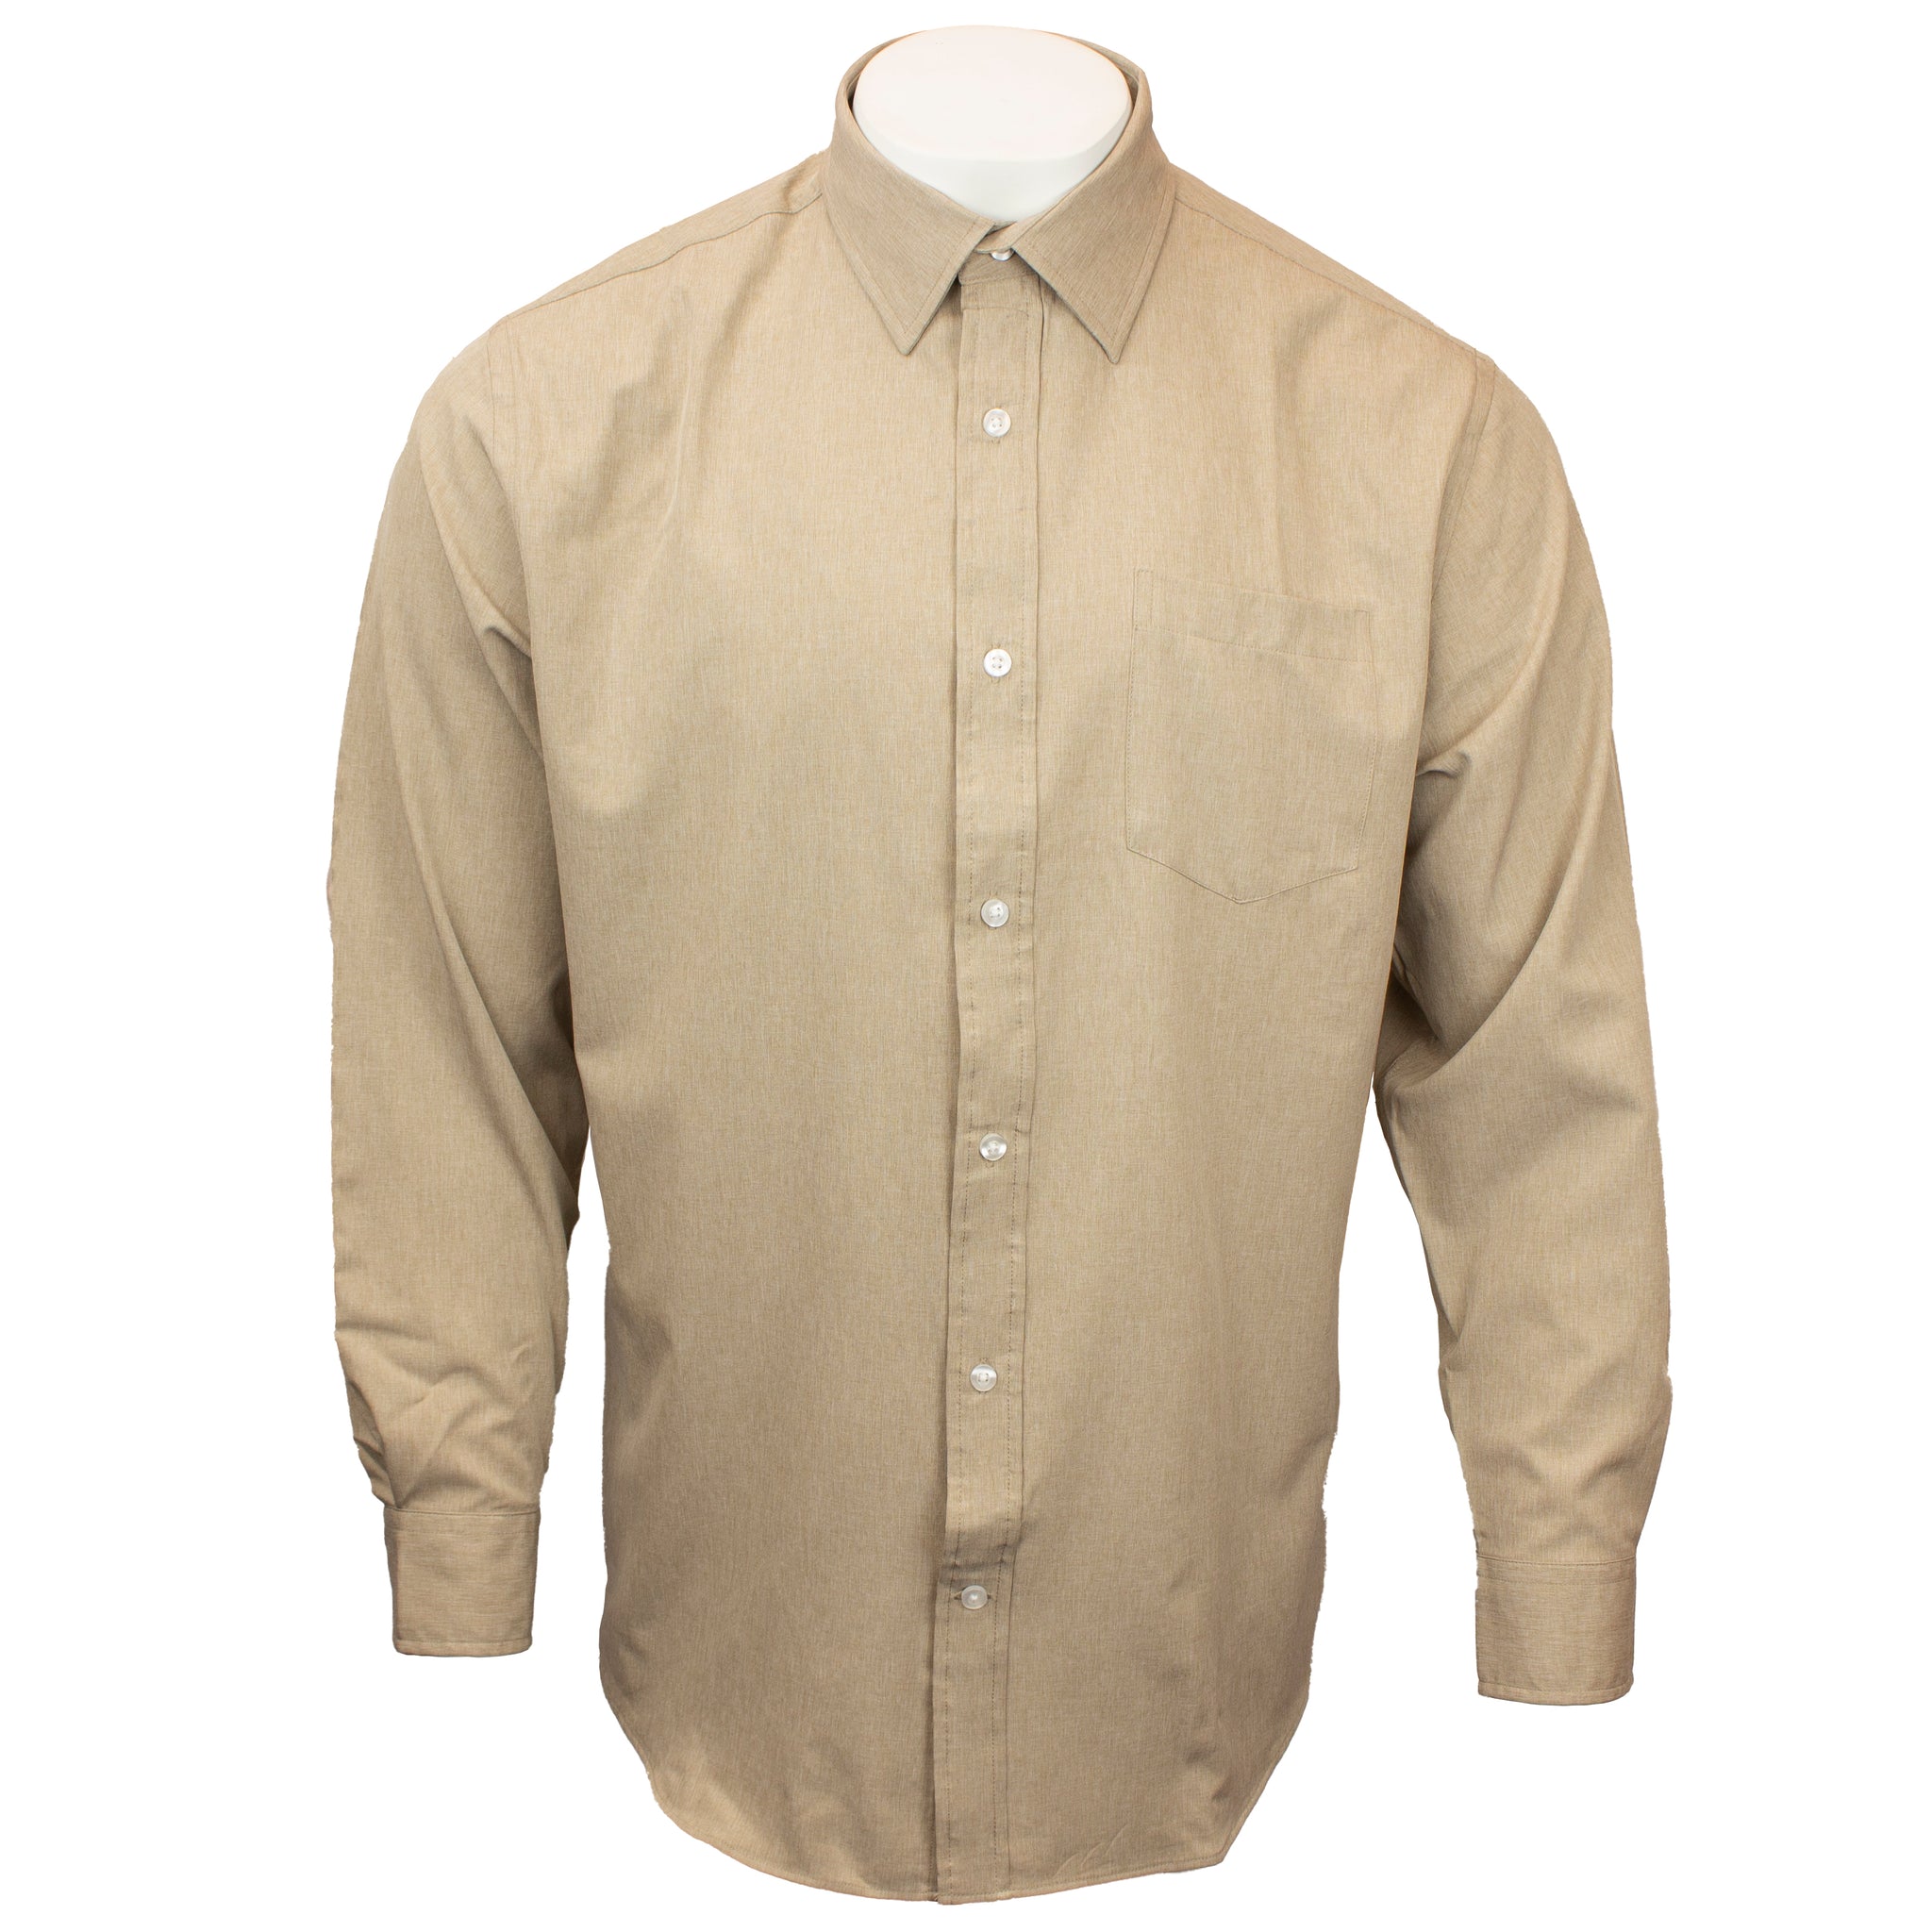 Under Armour Men's Ultimate Button Down Longsleeve Shirt (XX-Large